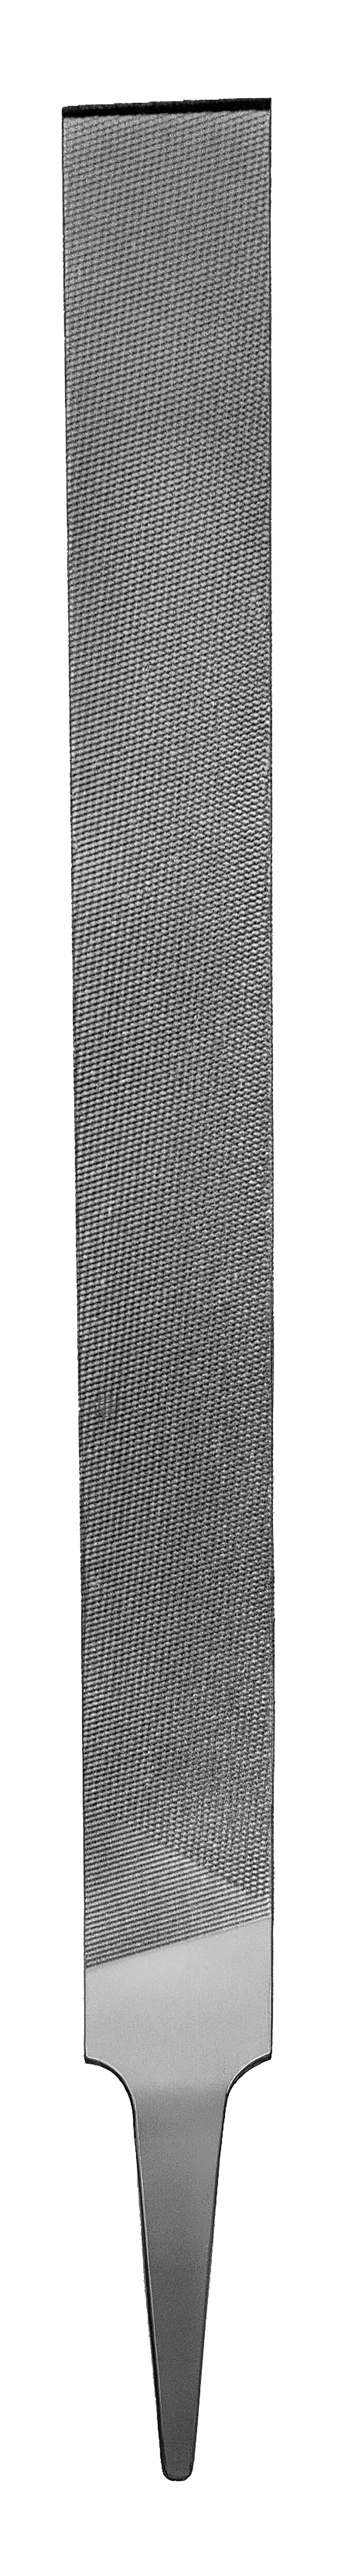 Foto of  Werkplaatsvijlen conform DIN 7261, vorm D, keep 2, 200 mm 